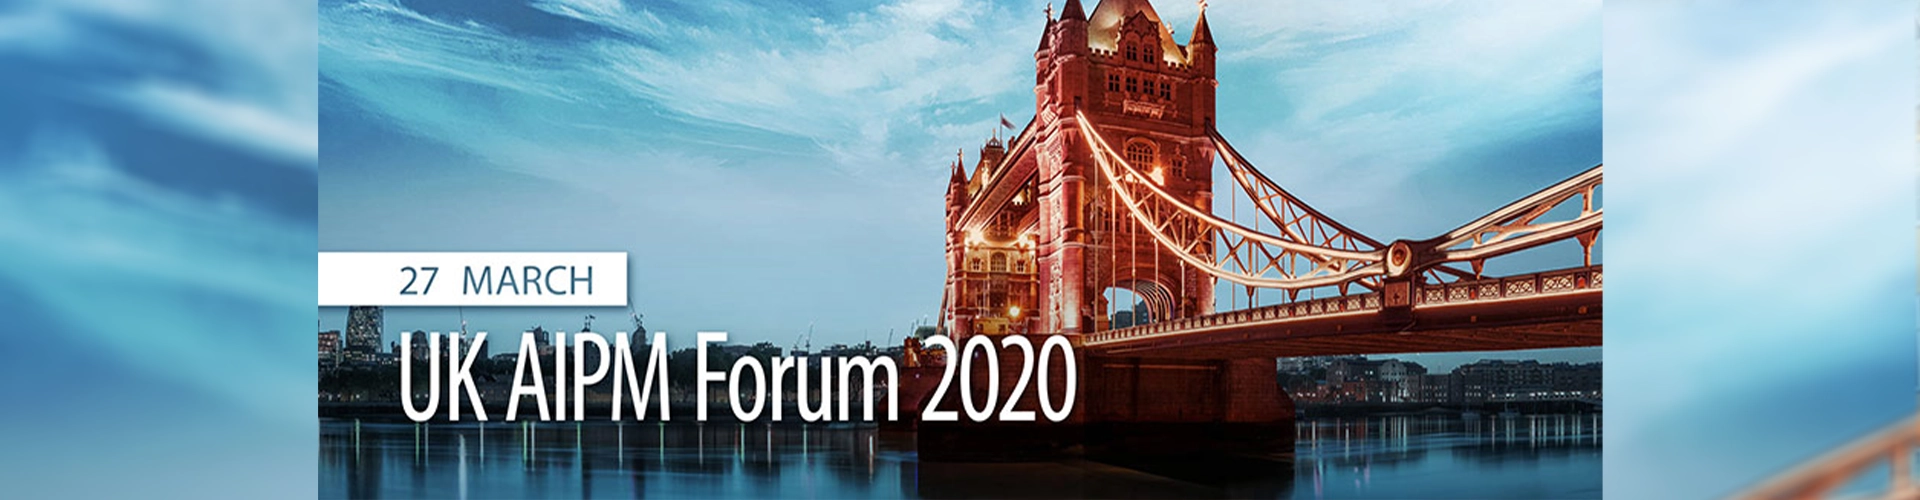 Blog Hero 2020 UK AIPM Forum - Copperleaf Decision Analytics